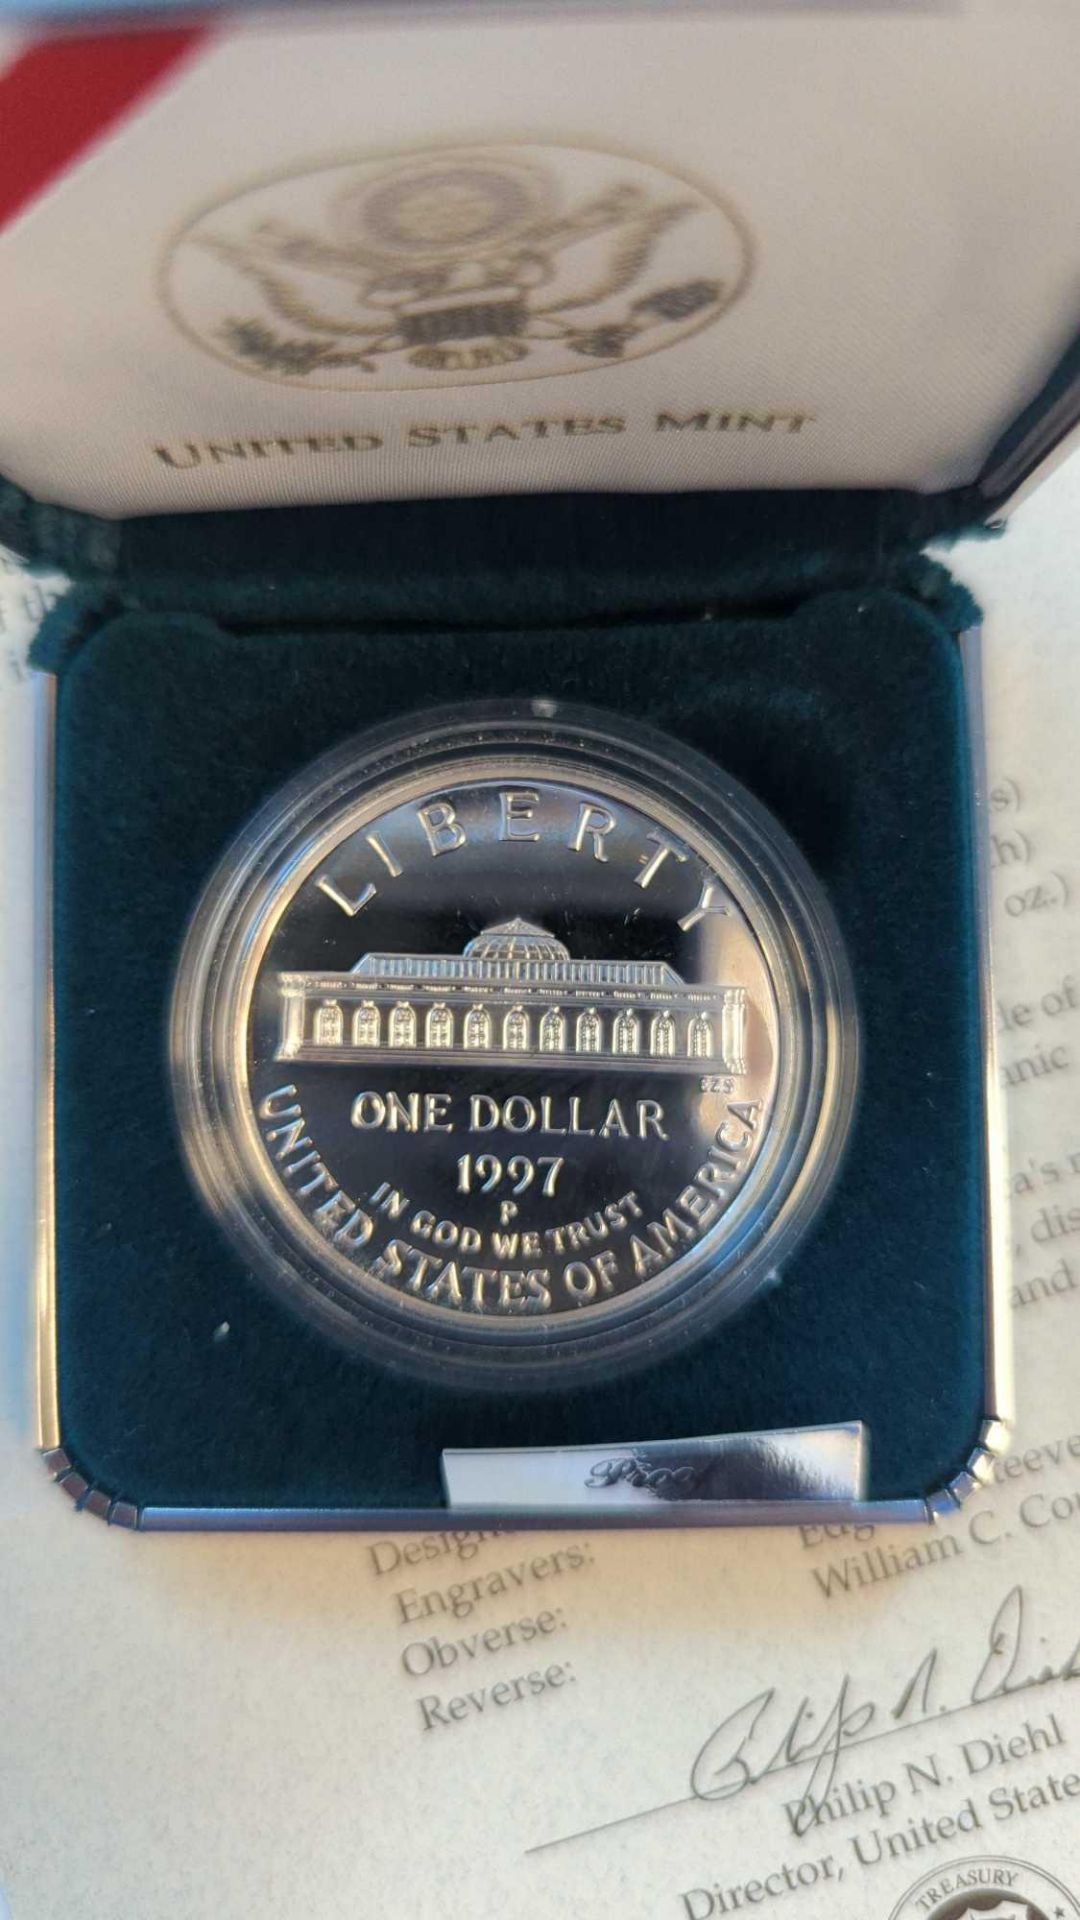 1997 United States Botanic Garden Commemorative Proof Silver Dollar with Box & COA - Image 2 of 4